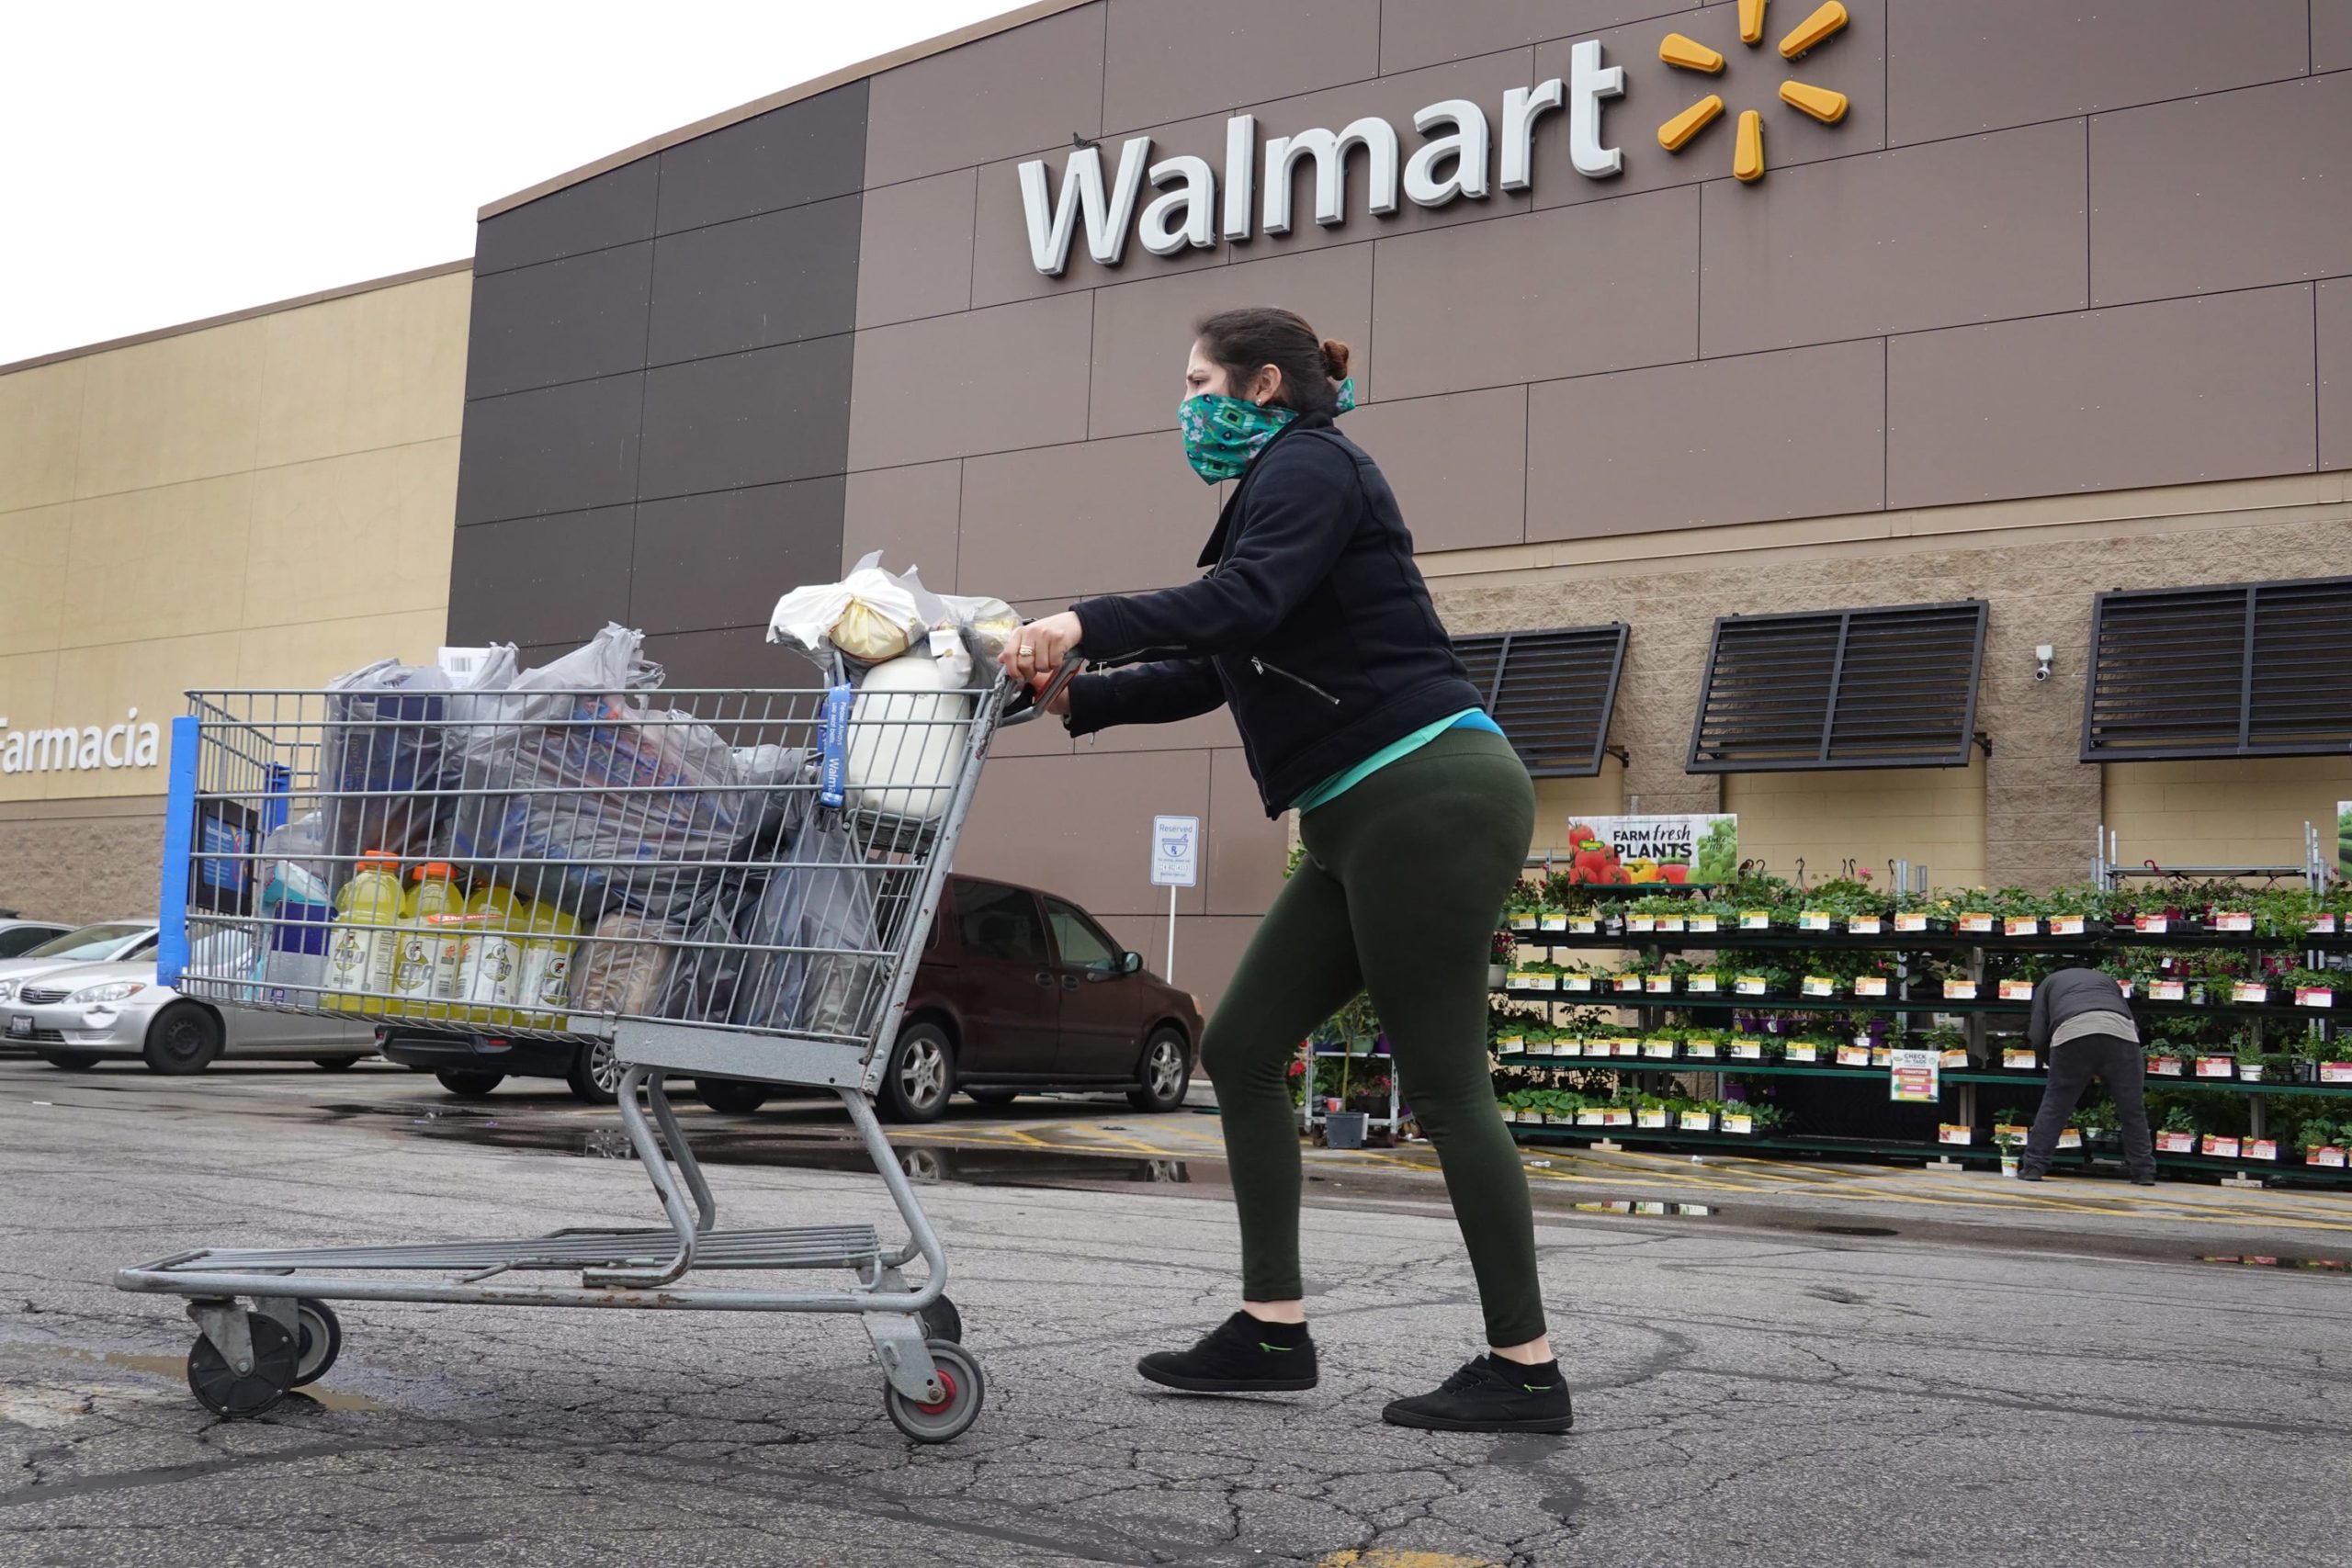 Walmart teases launch of membership program as e-commerce surges